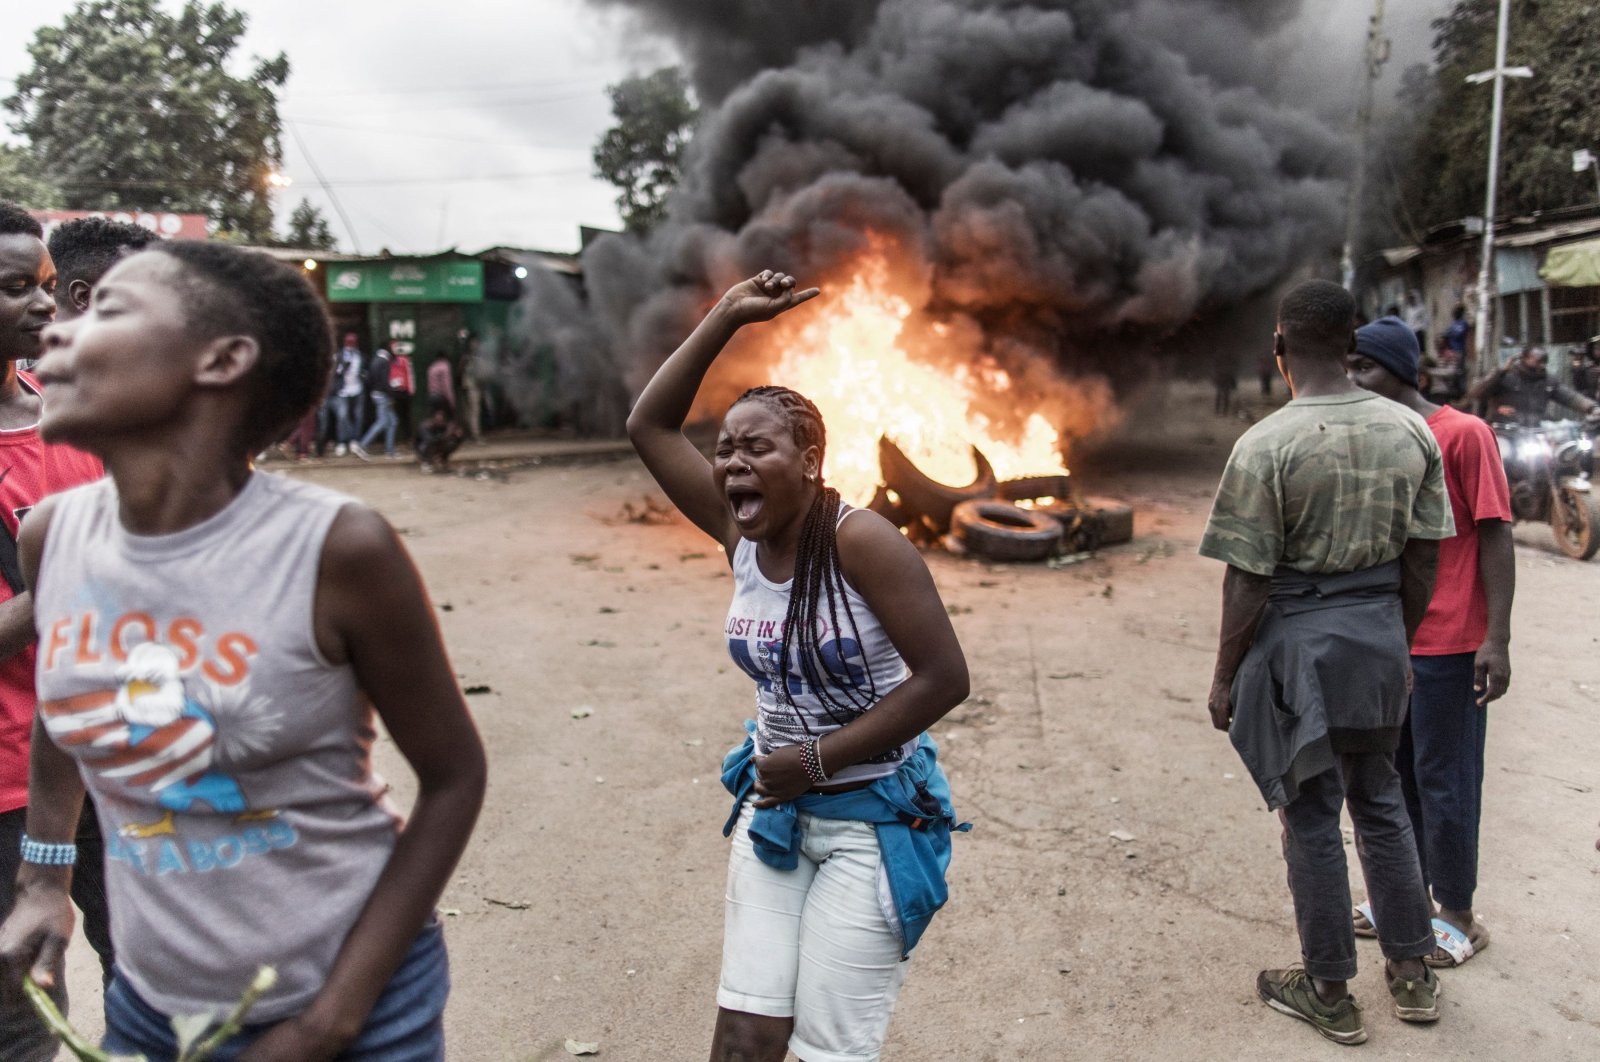 Supporters of Kenya&#039;s Azimio La Umoja (Declaration of Unity) presidential candidate Raila Odinga demonstrate over burning tires in Kibera, Nairobi, Kenya, Aug. 15, 2022. (AFP Photo)